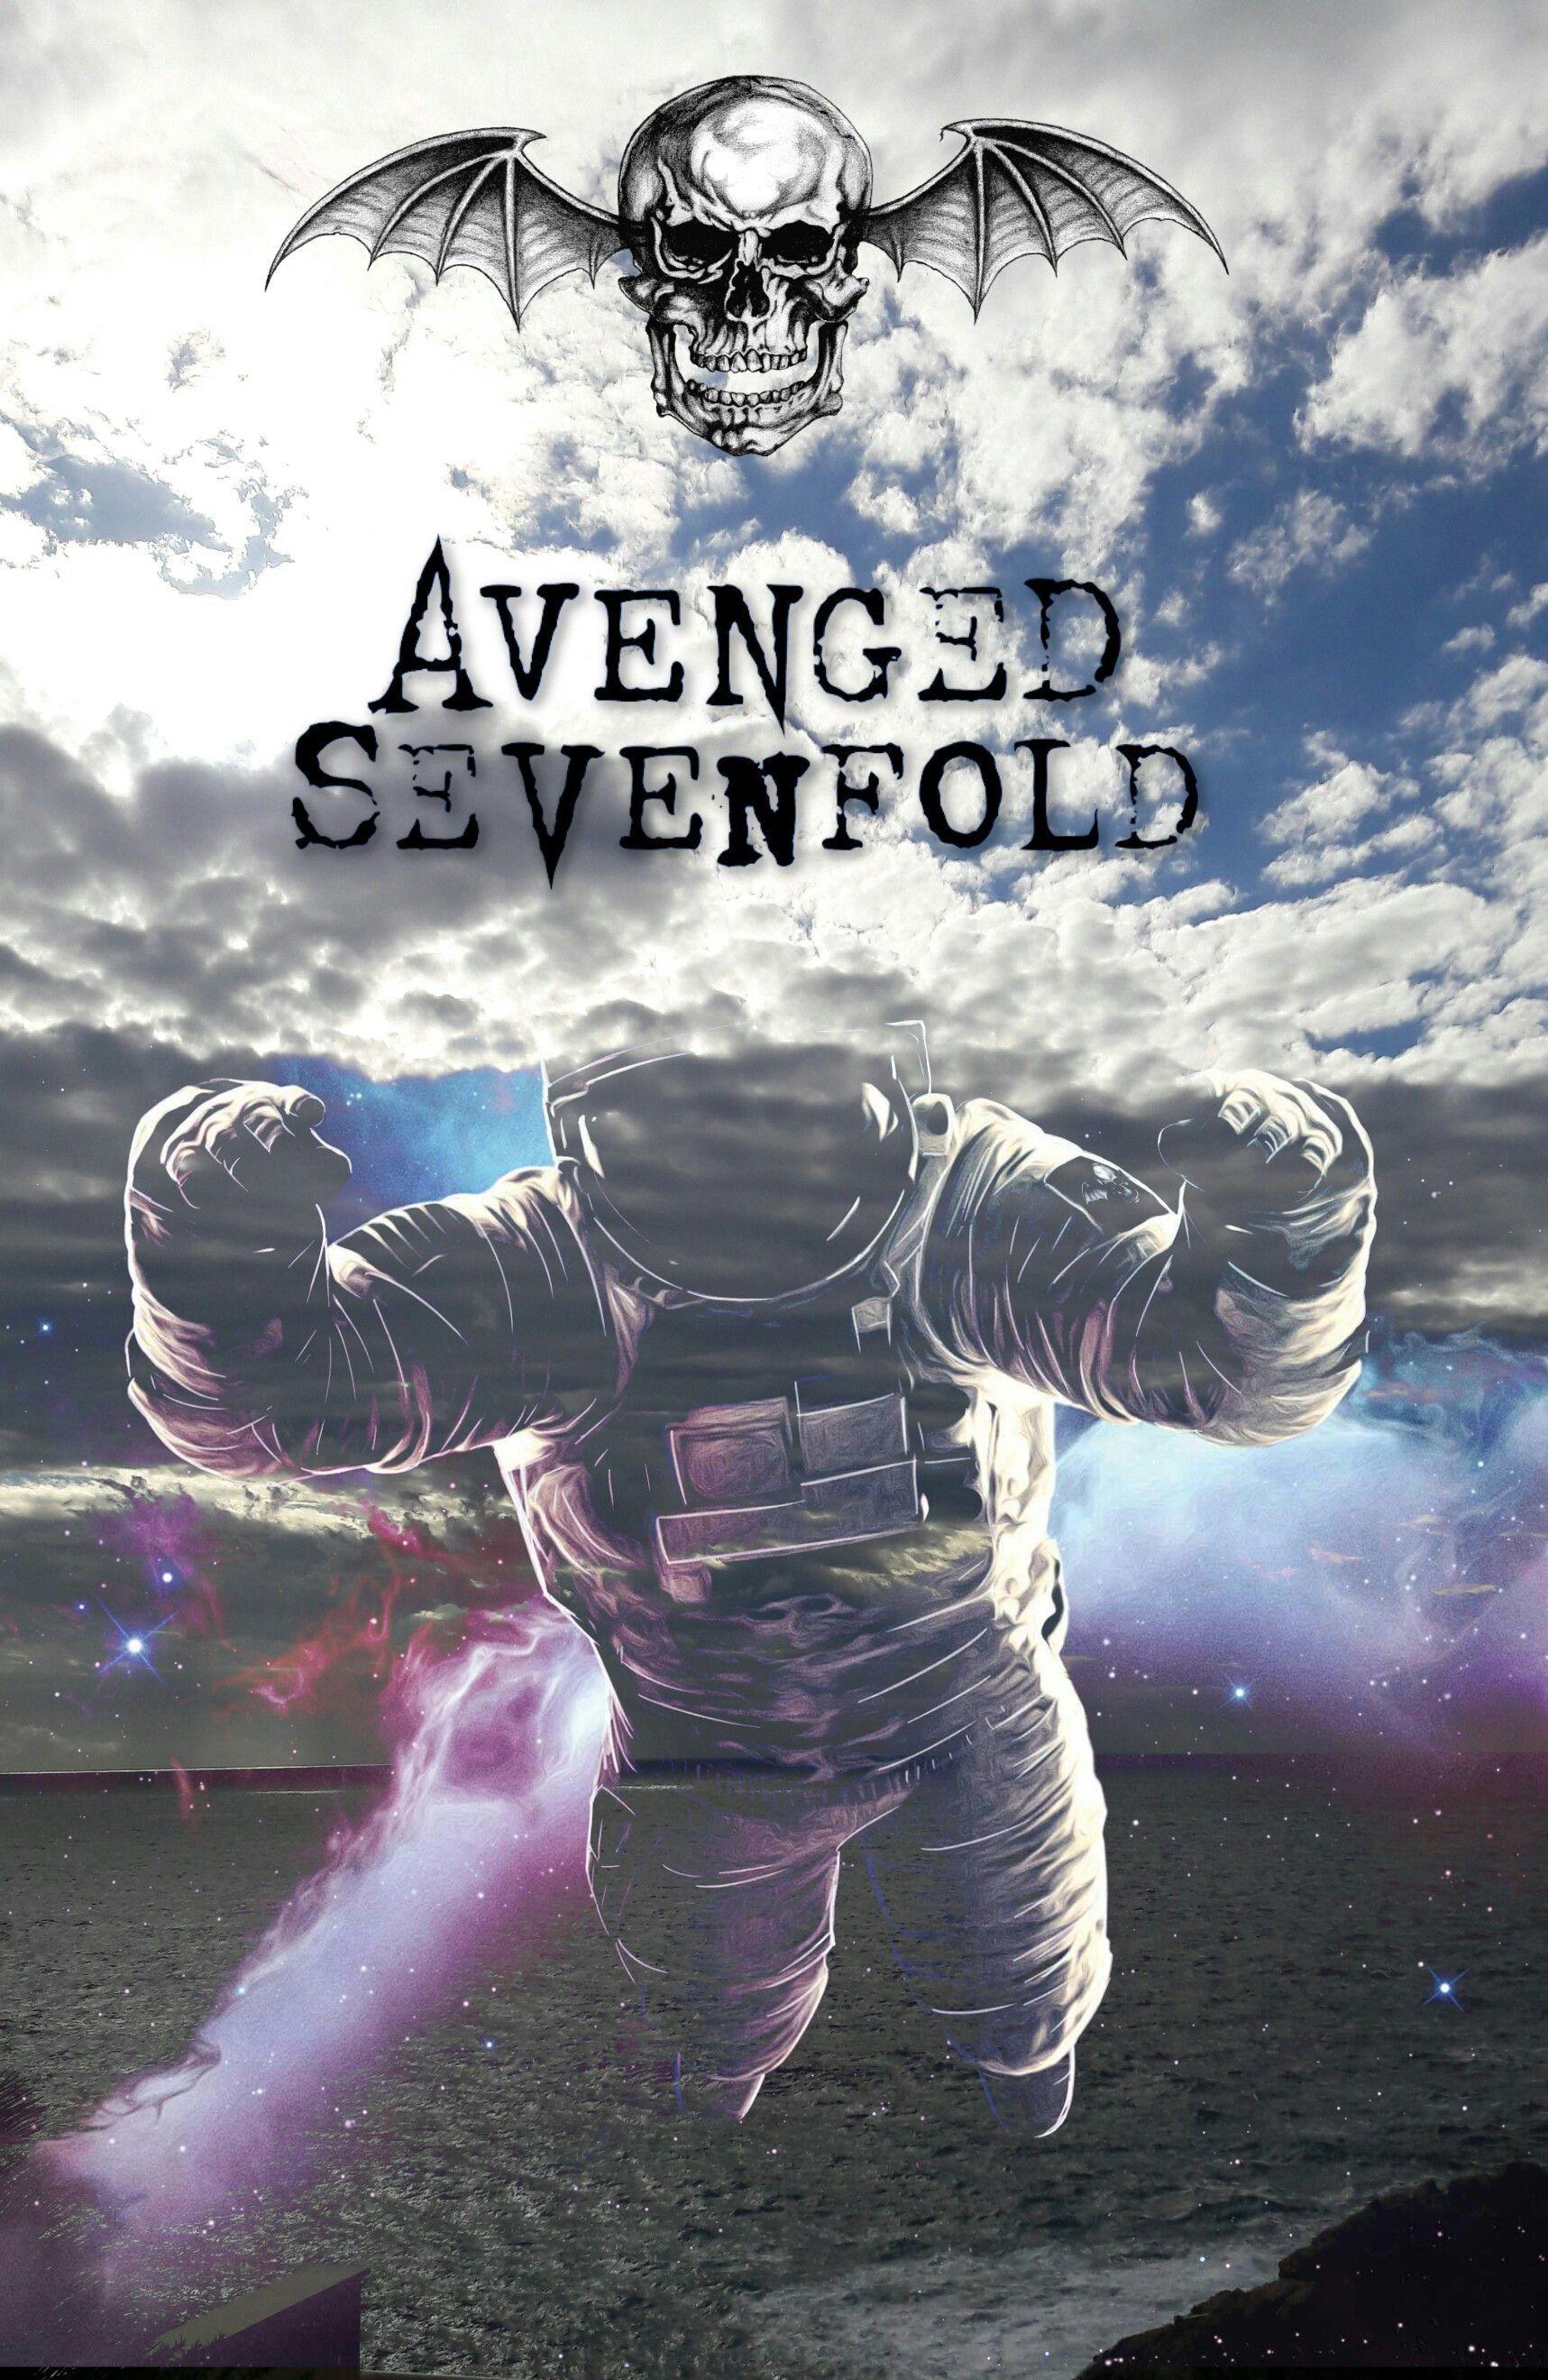 46 Avenged Sevenfold Wallpaper Android  WallpaperSafari